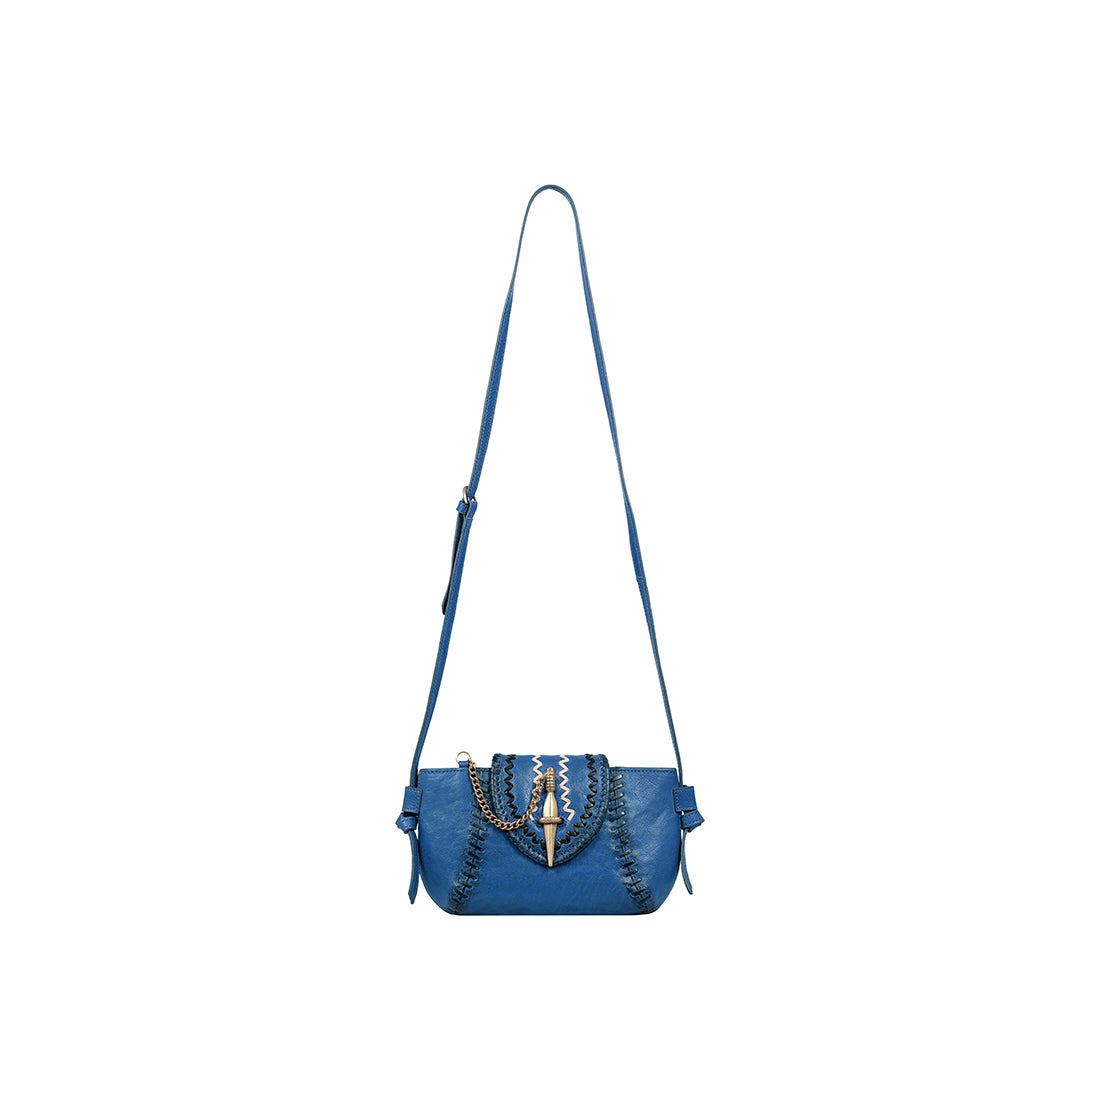 Hidesign Women's Sling Bag (Blue) : : Fashion